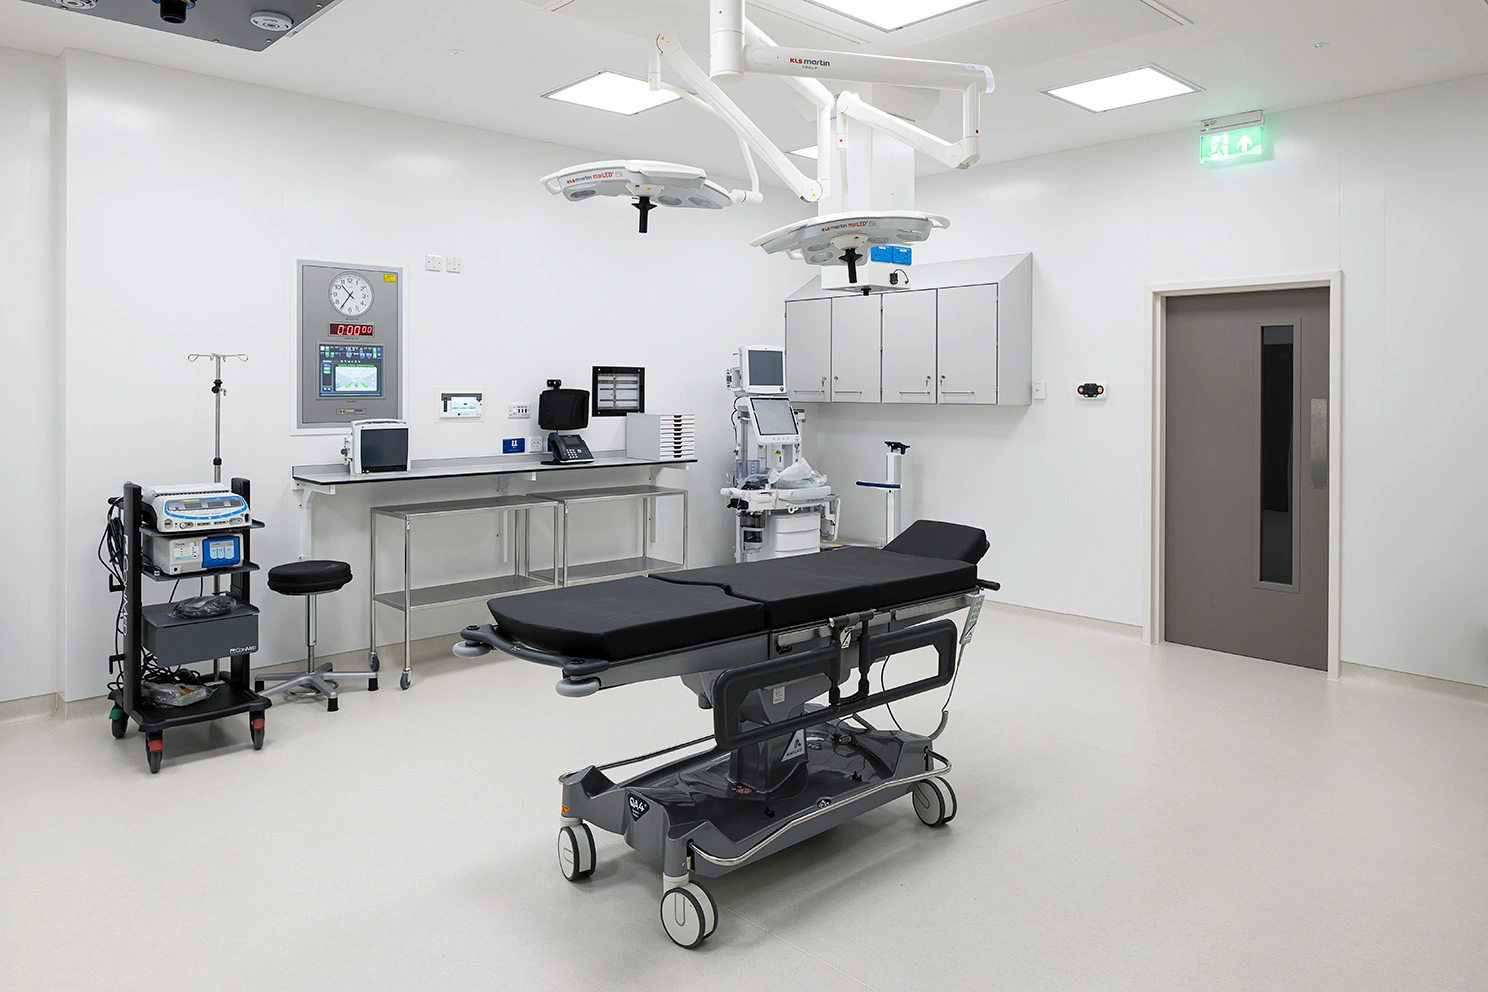 Bespoke Surgery Theater Room Scottish Health Technical Memorandum SHTM Guidelines LED New Healthcare Hospital Private Cosmetic Clinic Design NVDC Architects